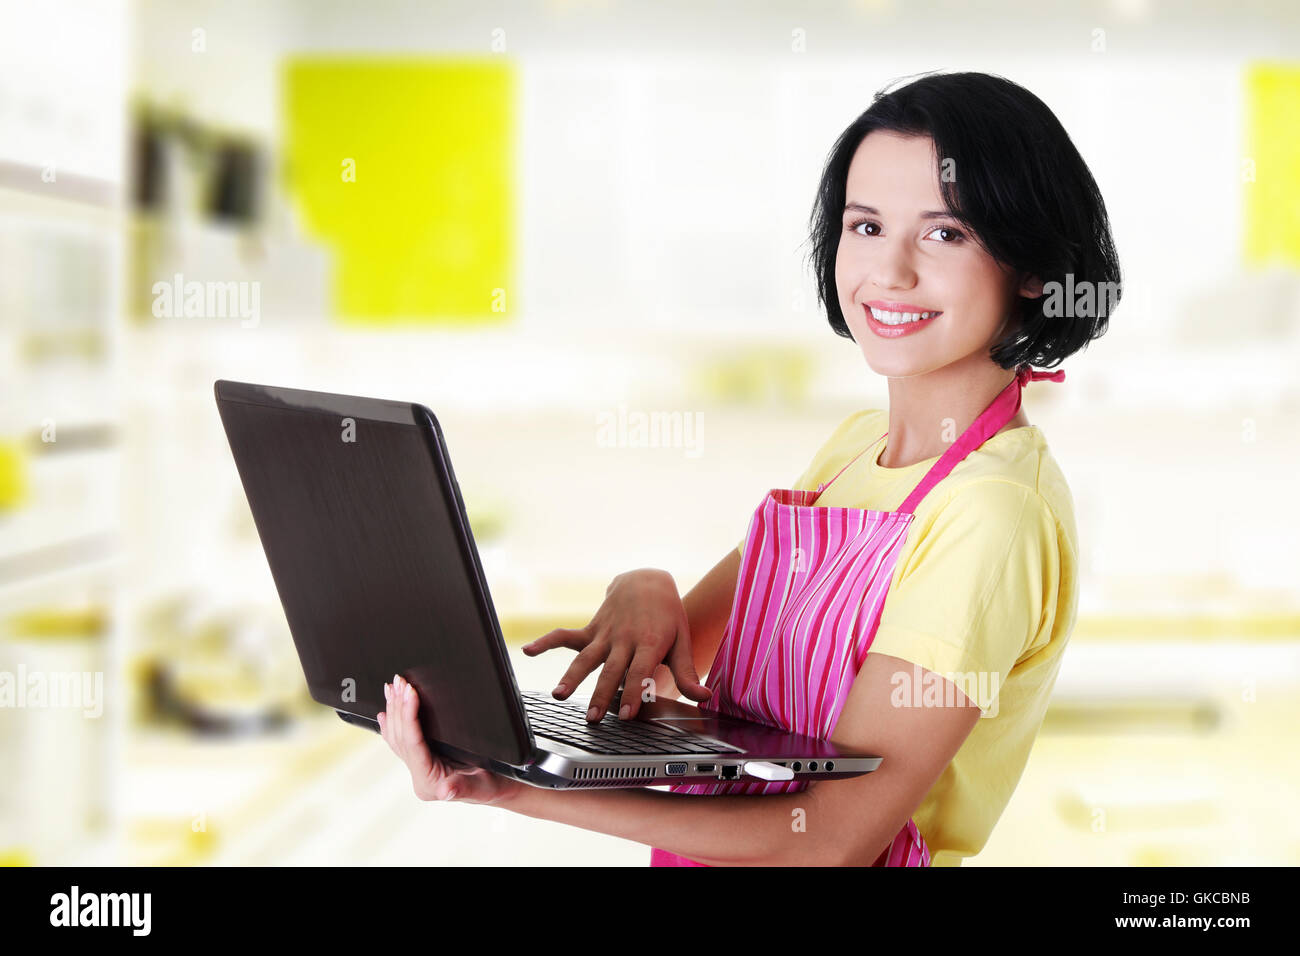 modern housewife or female worker Stock Photo